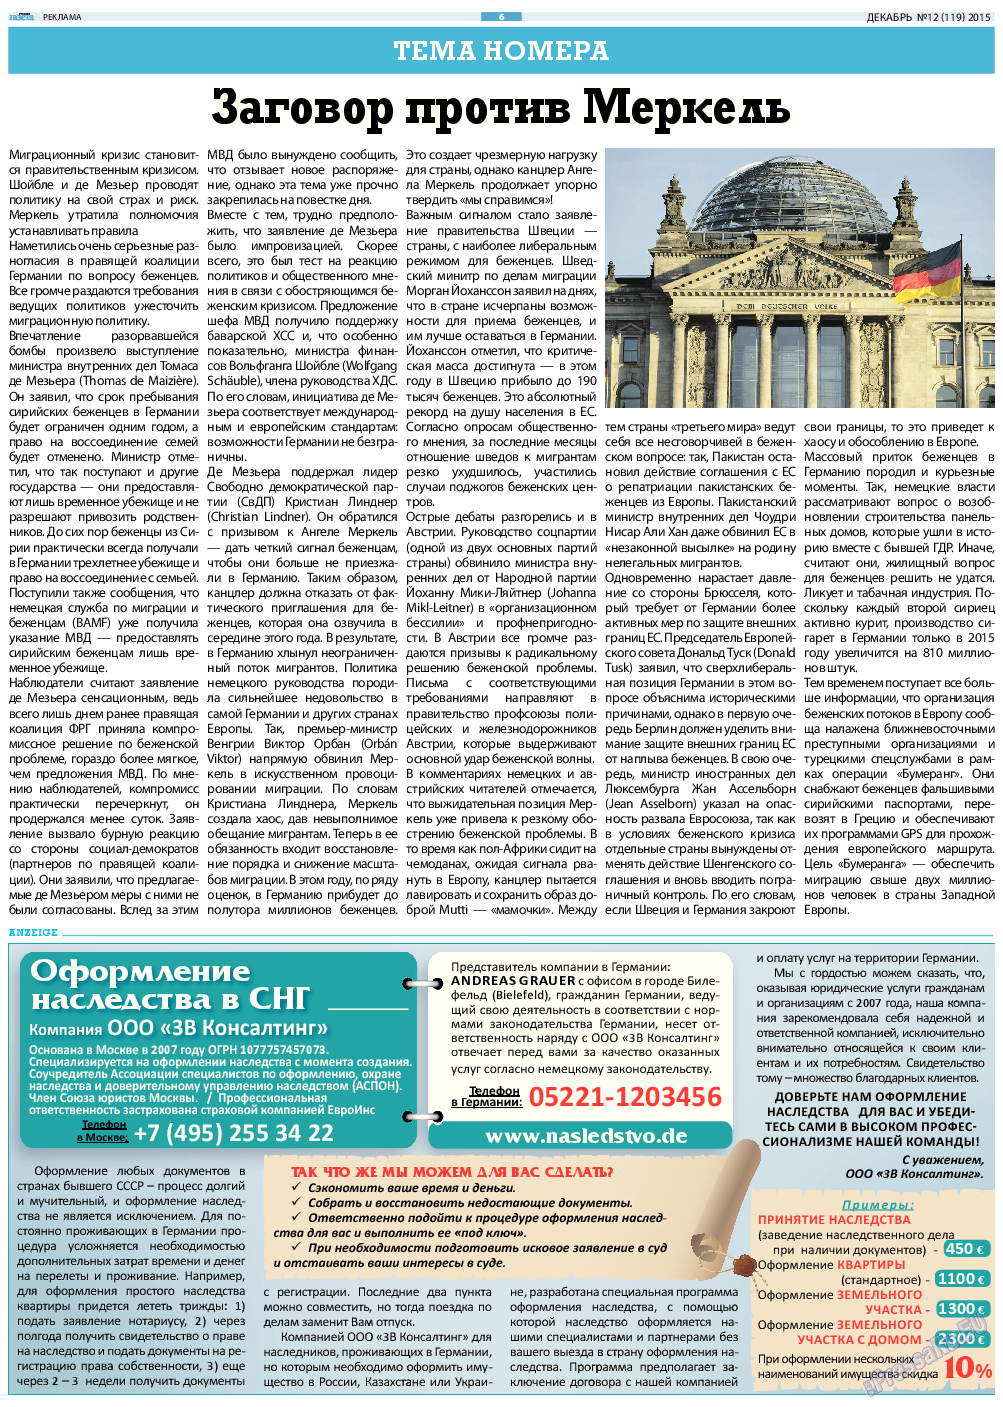 Русская Газета, газета. 2015 №12 стр.6